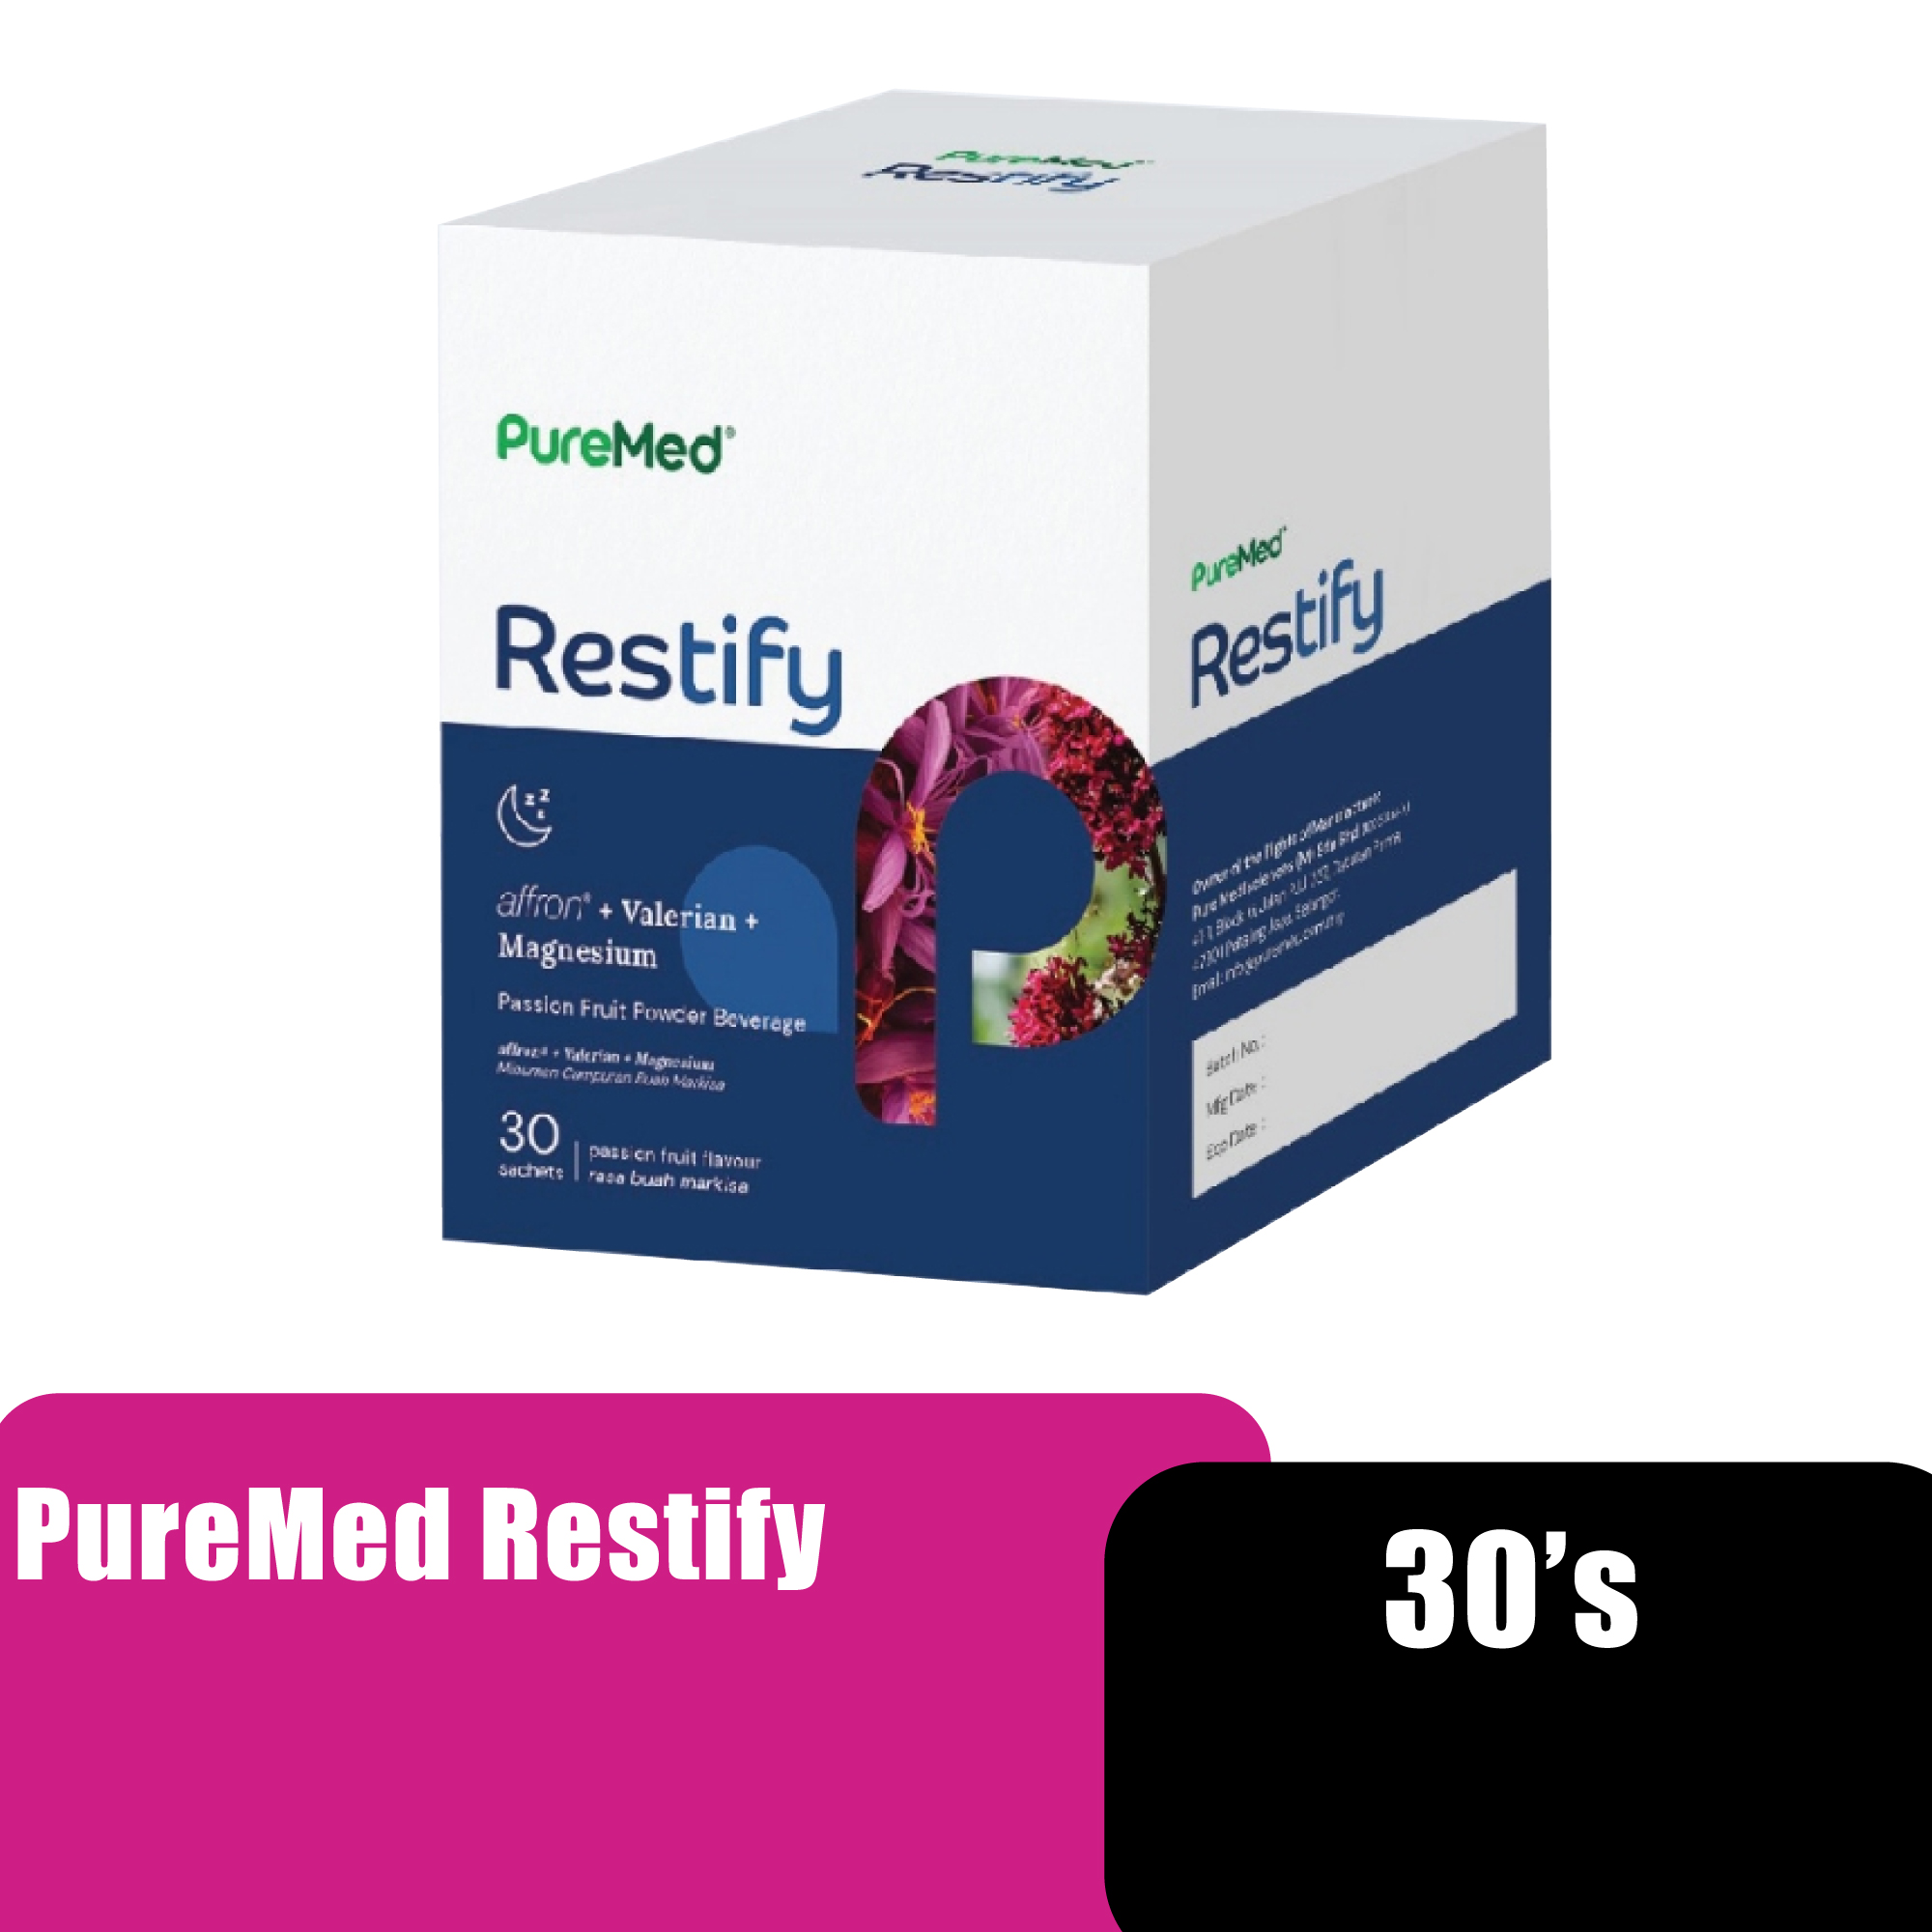 PureMed Restify Capsule, Sleeping Aid Supplement, Sleep Supplement, Tidur Lena, 安眠药, 睡觉 - 30's